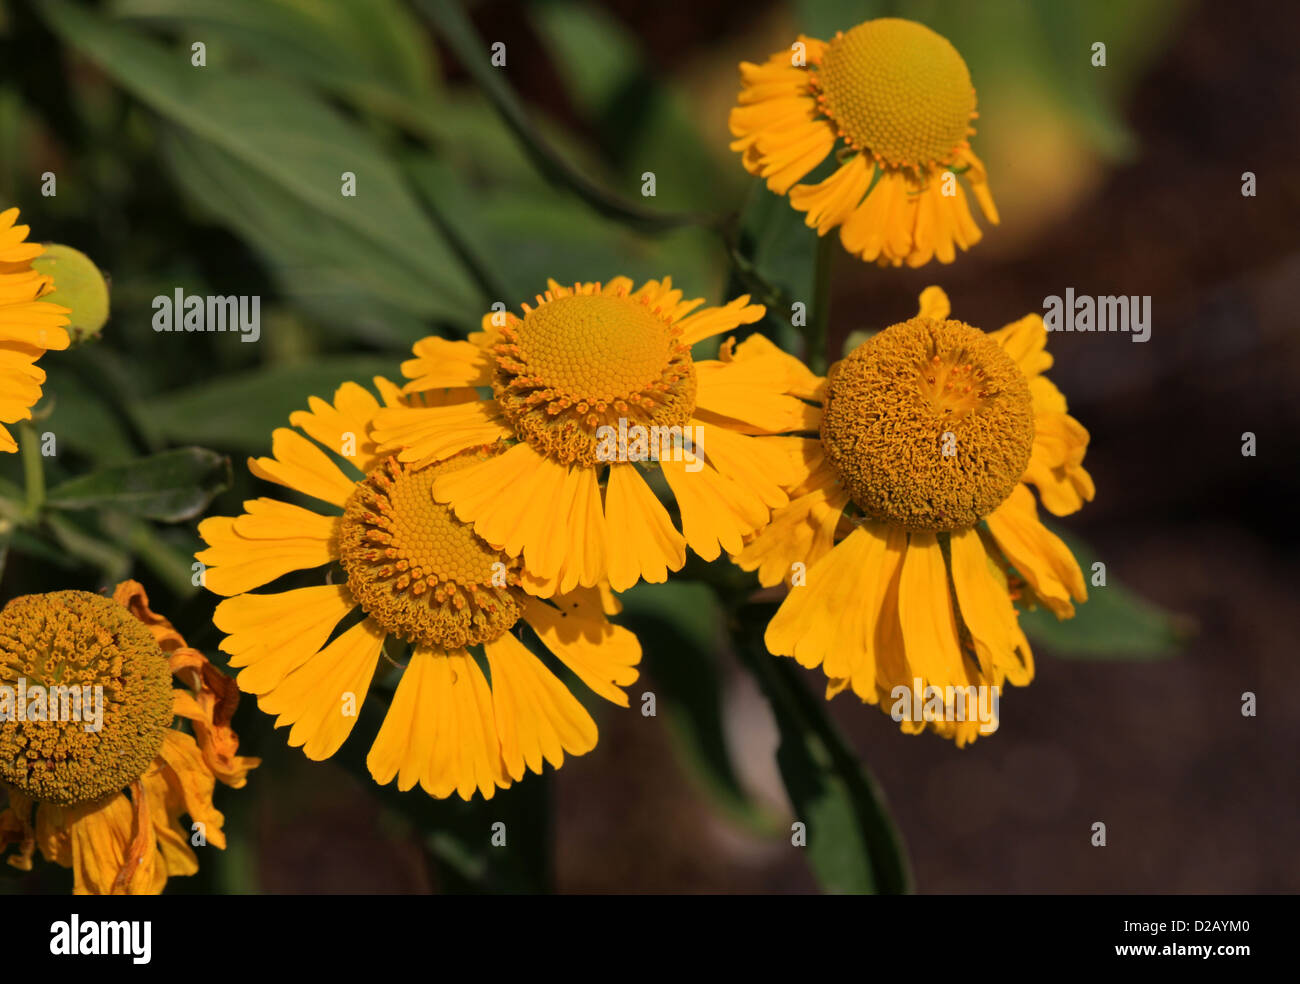 Bigelows Sneezeweed, Bigelows Sneezeweed, Sneezeweed, Helenium Bigelovii, Asteraceae. Oregon, Kalifornien, USA, Nordamerika. Stockfoto